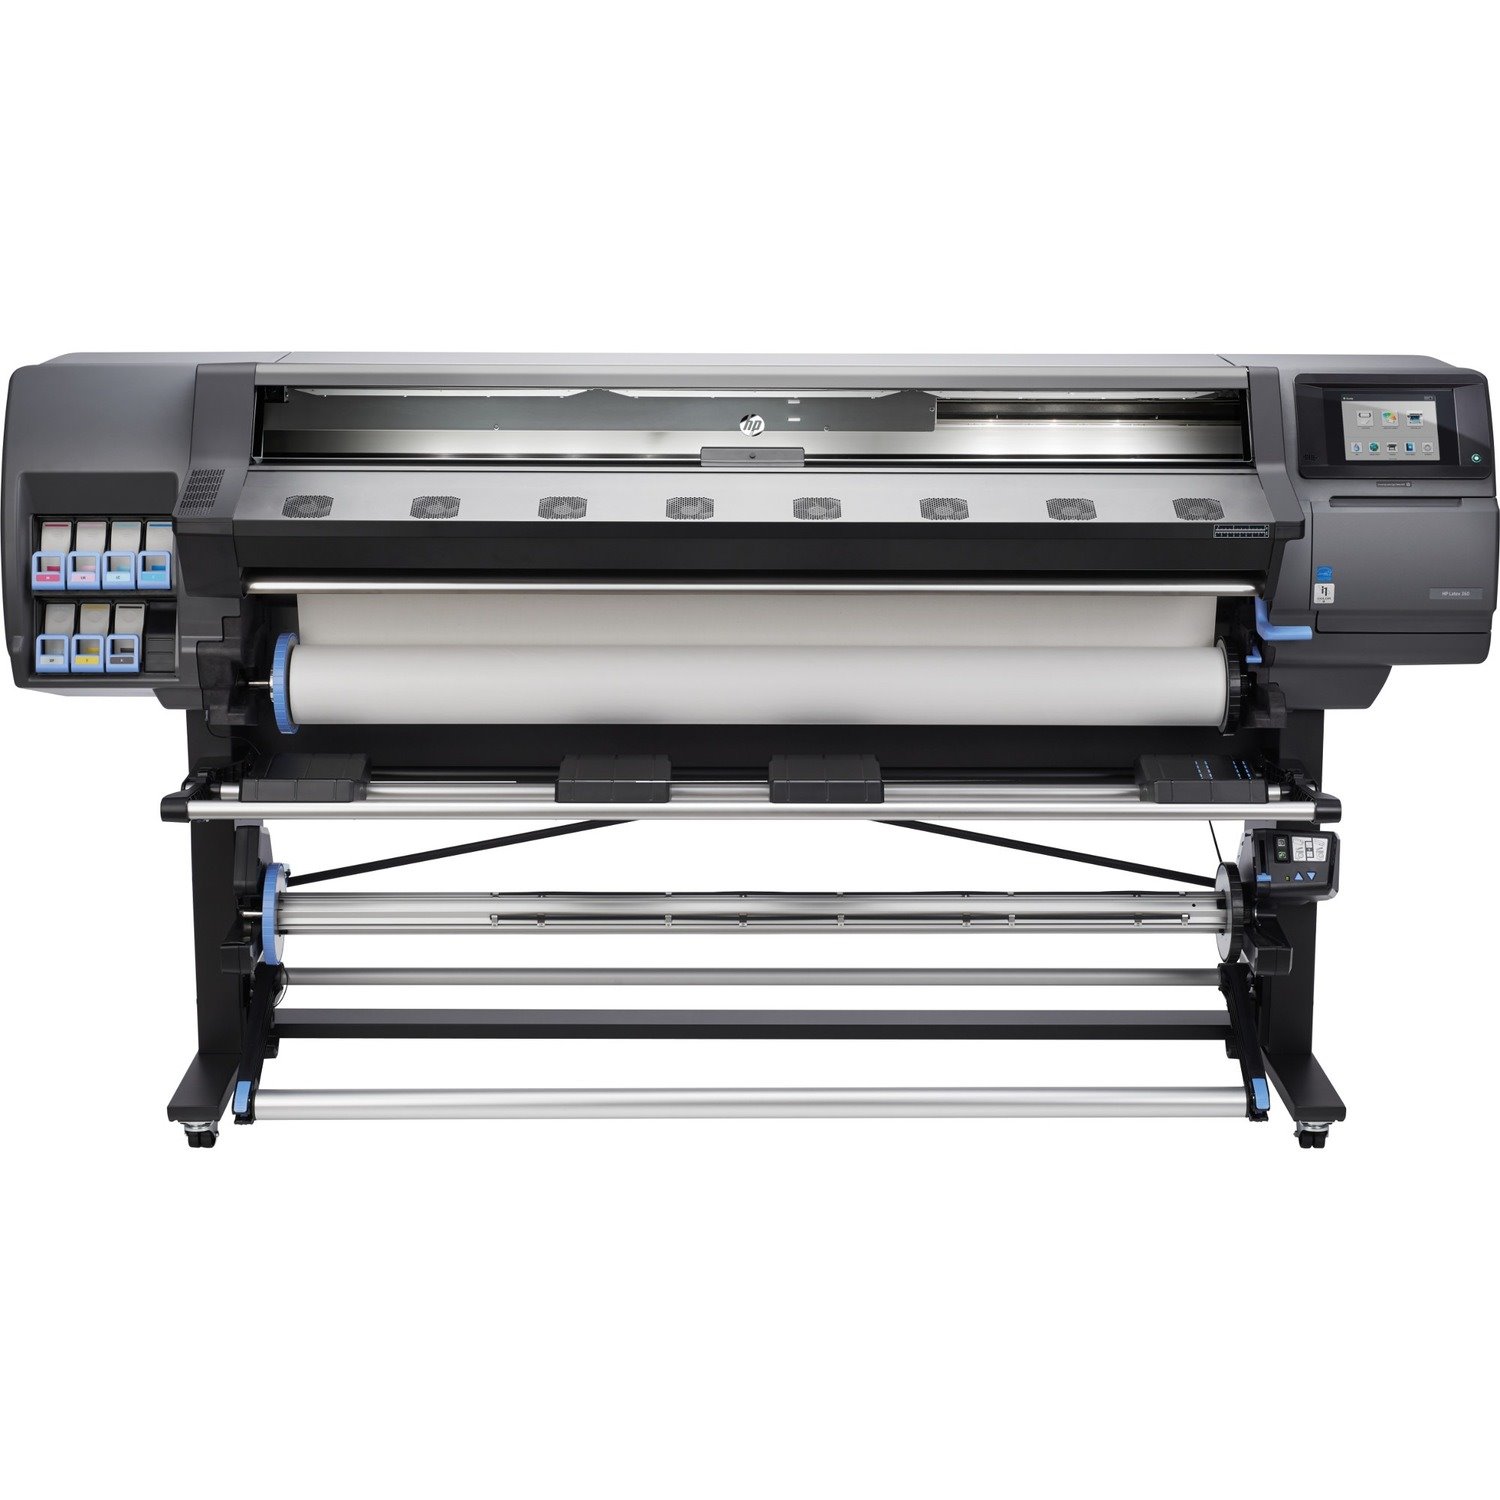 HP Latex 360 Inkjet Large Format Printer - Colour